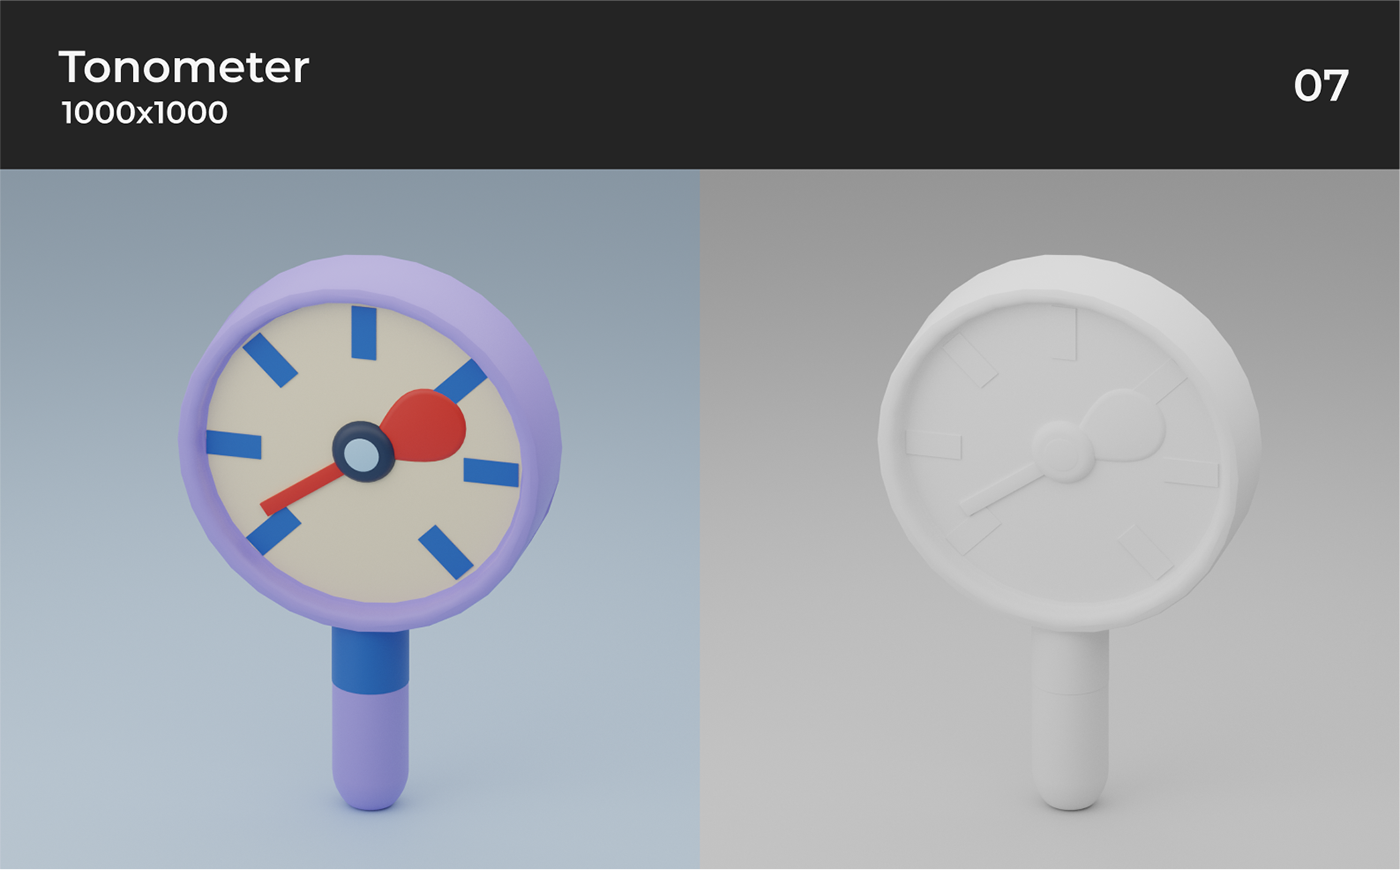 3D 3д blender design icons icons set labaratory simple дизайн иконки